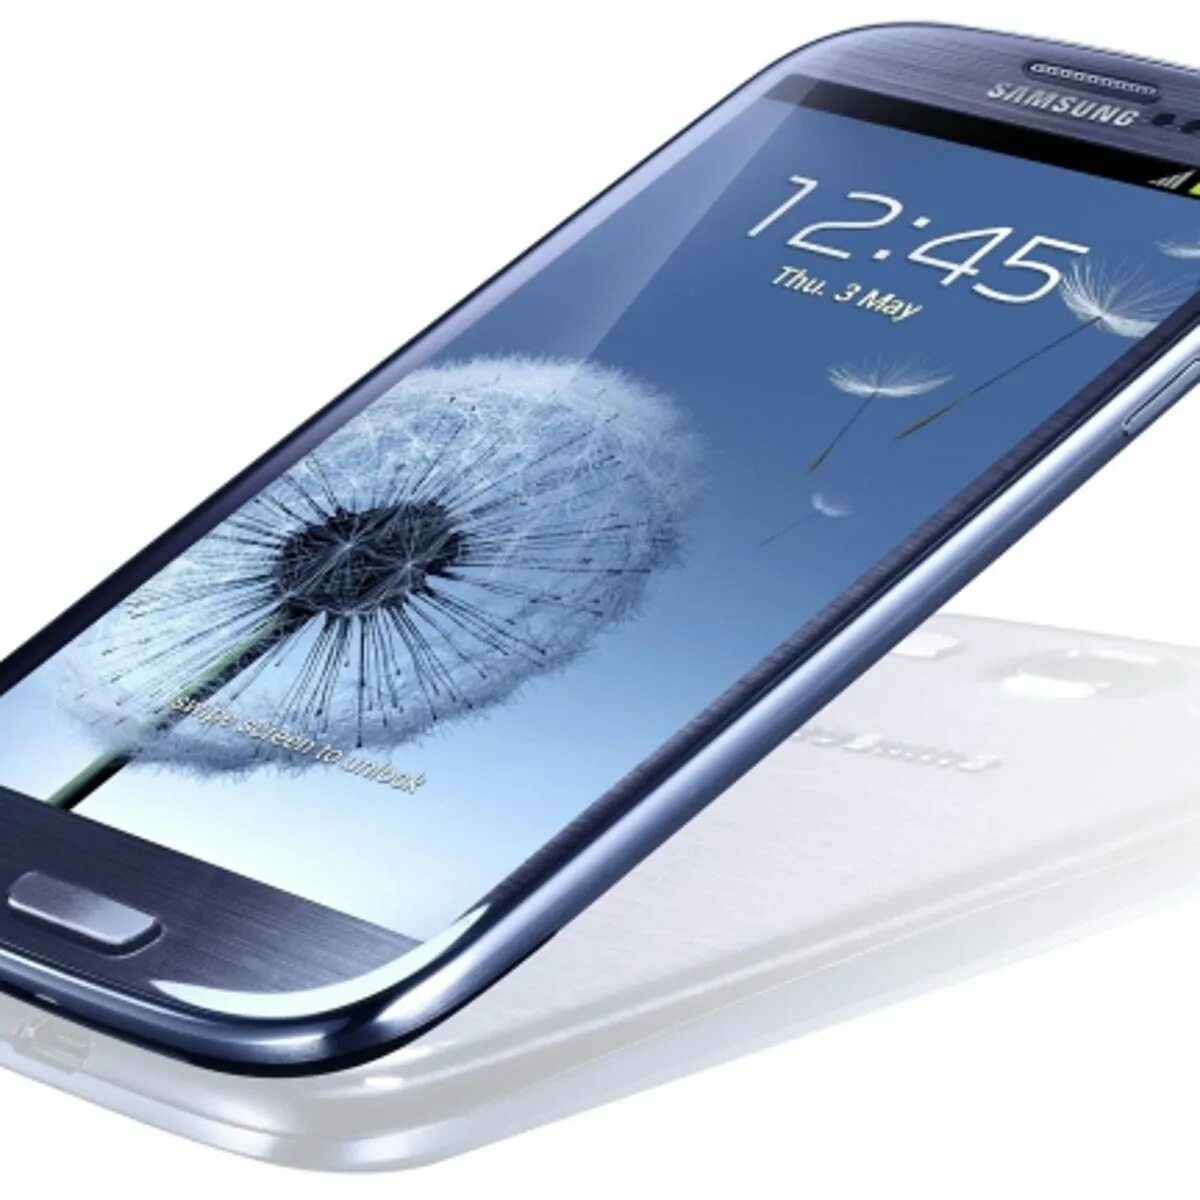 Samsung Galaxy s3. Samsung 2023 смартфон. Новый самсунг галакси 2023. Samsung Galaxy s III.